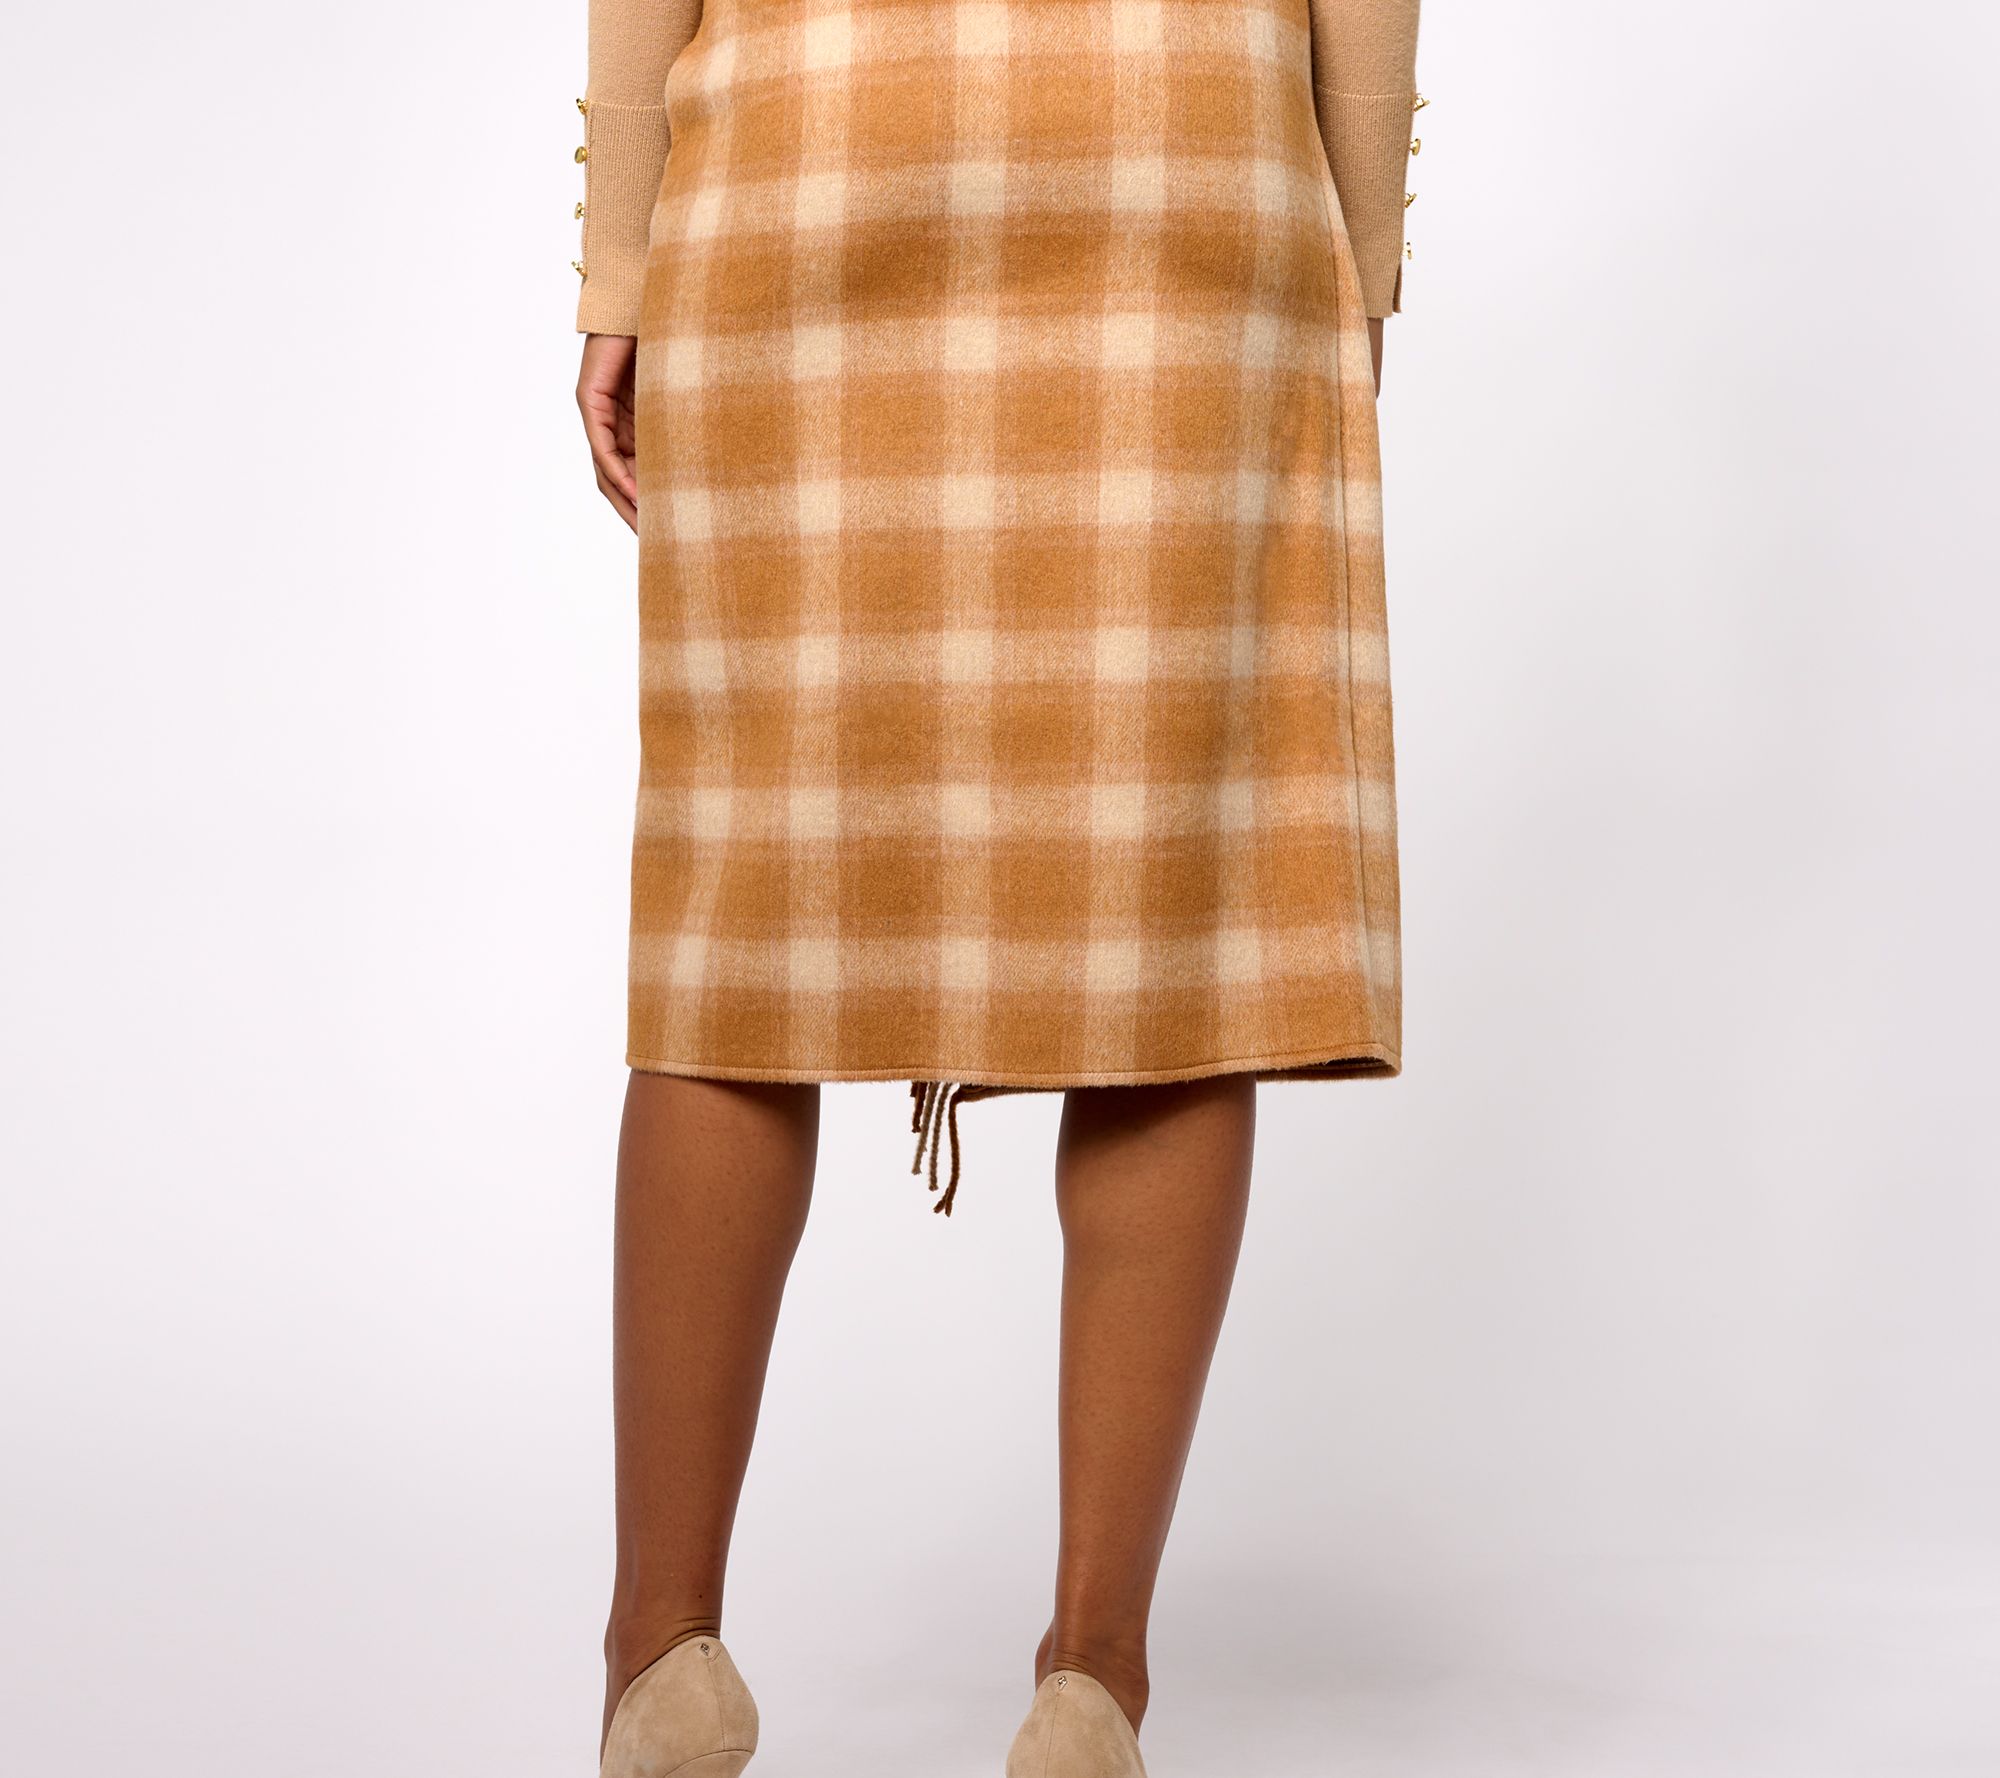 Denim & Co. Heritage Plaid Blanket Skirt with Fringe